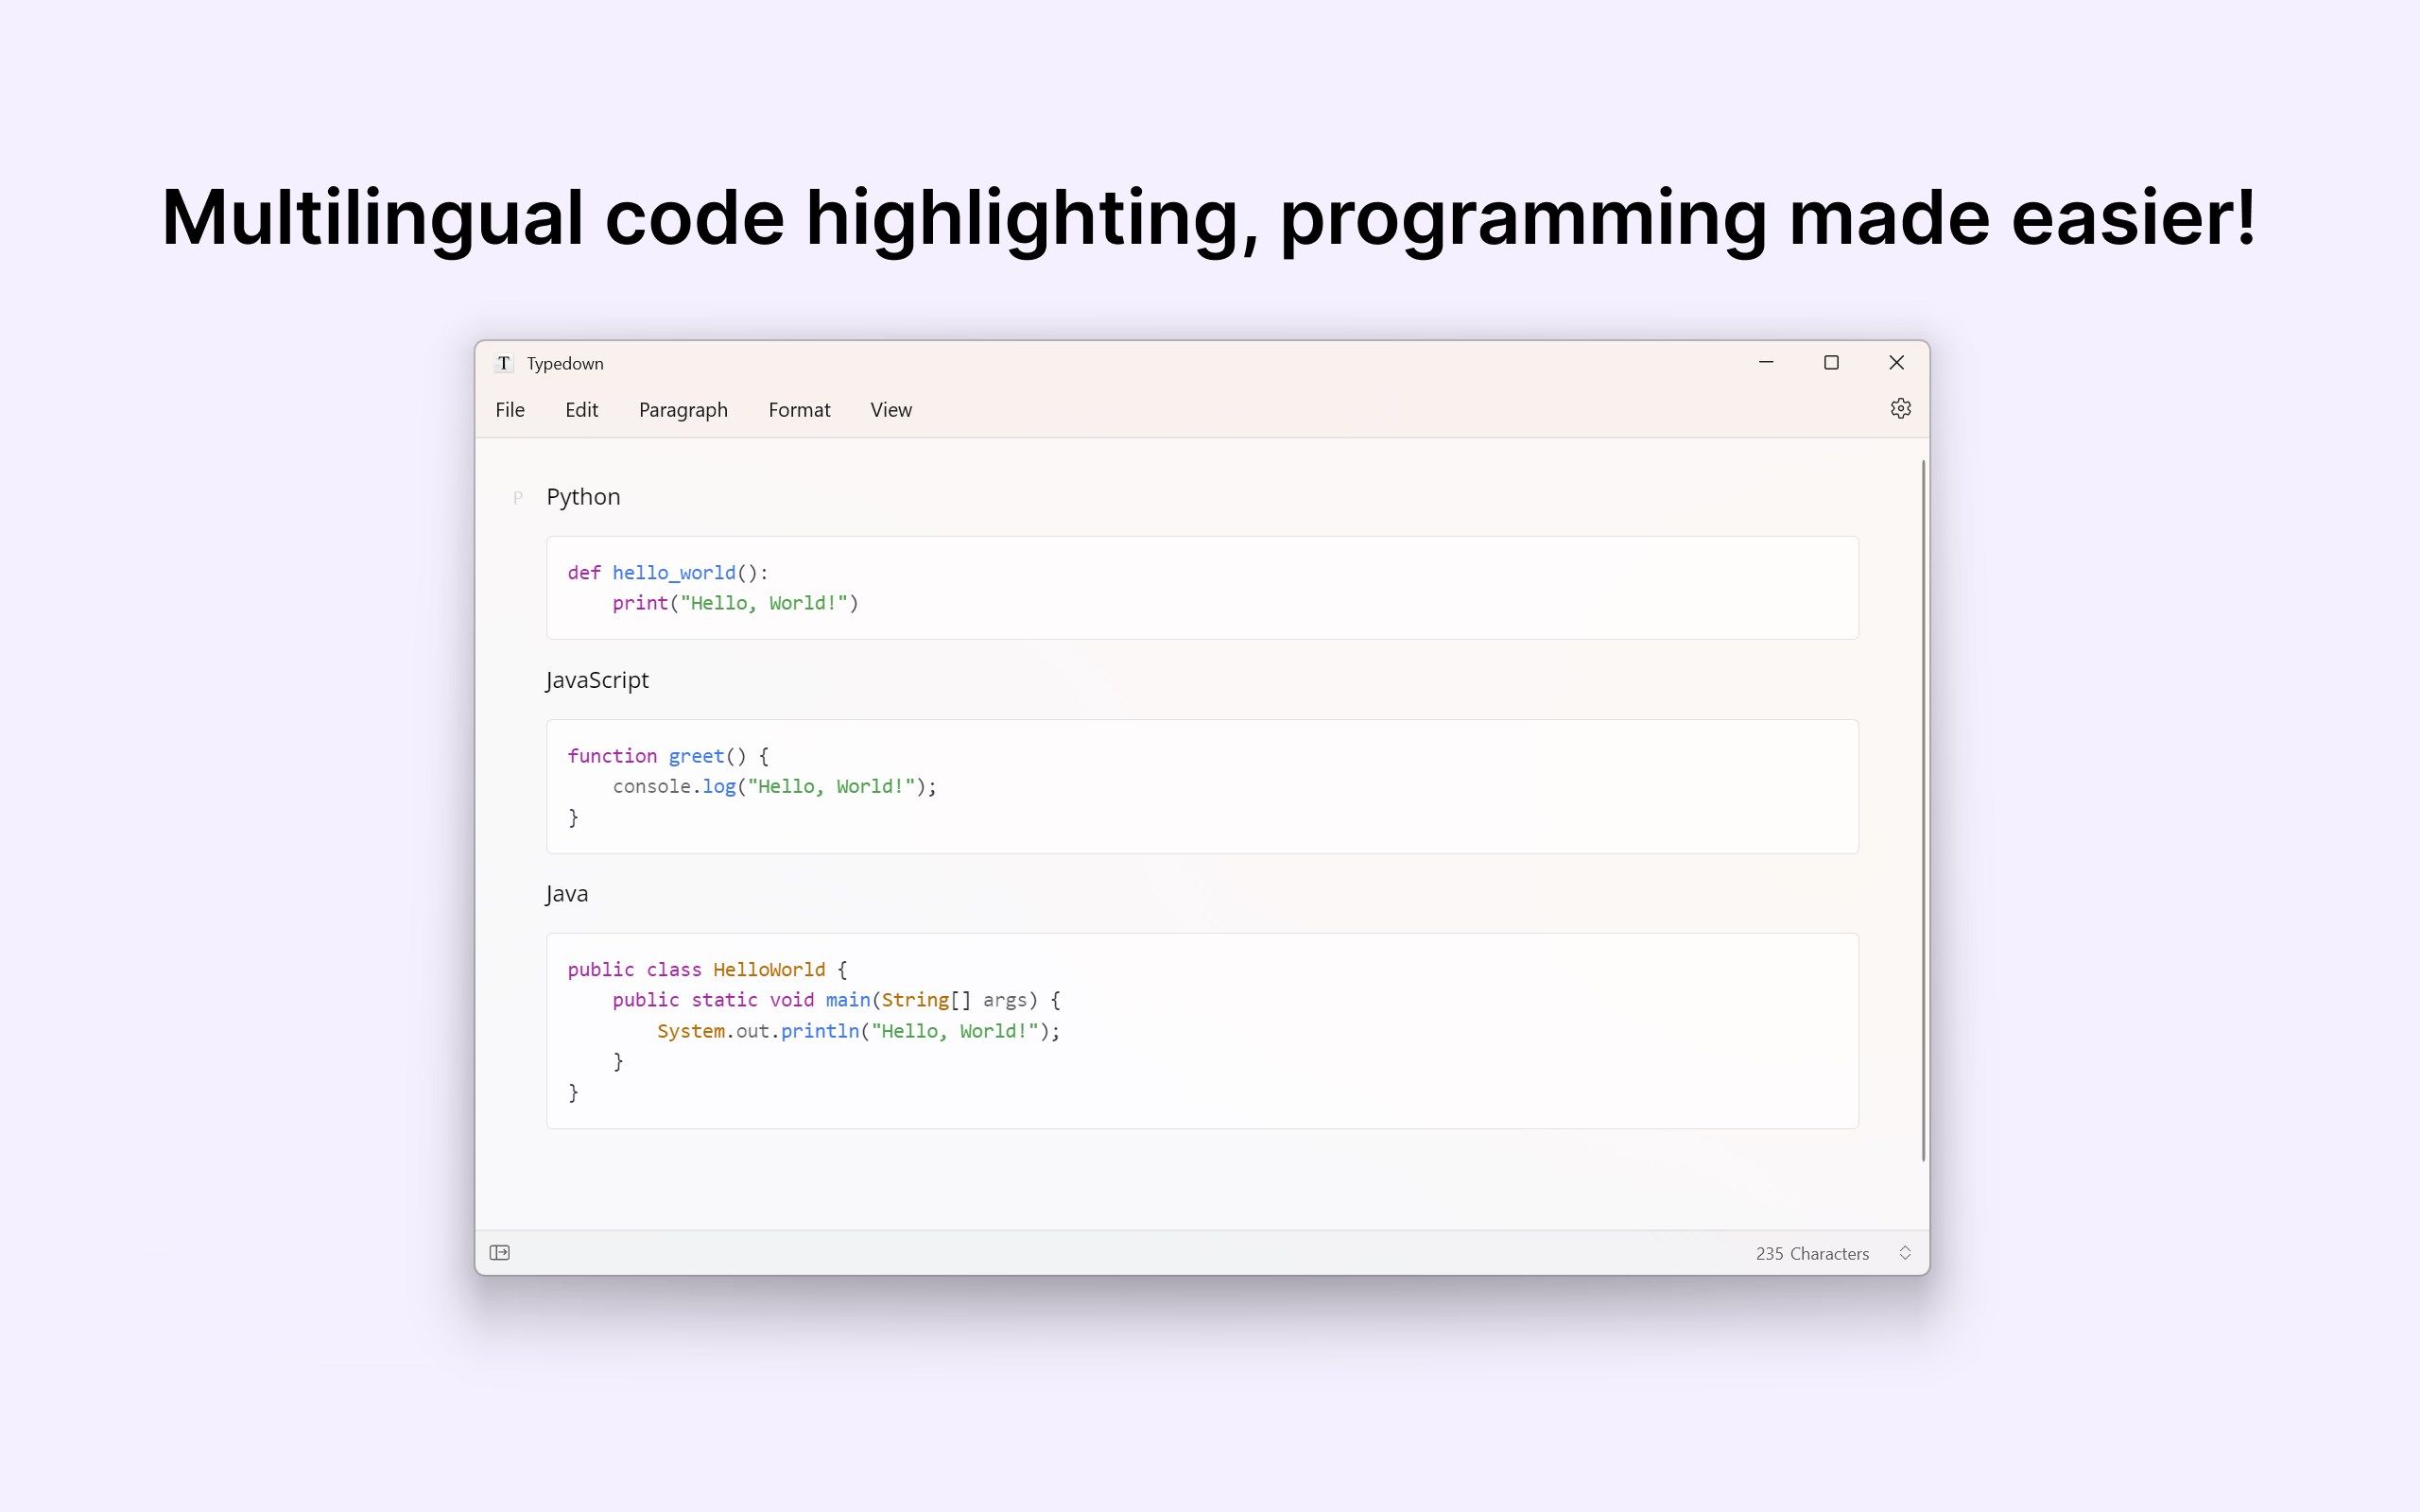 Multilingual code highlighting, programming made easier!